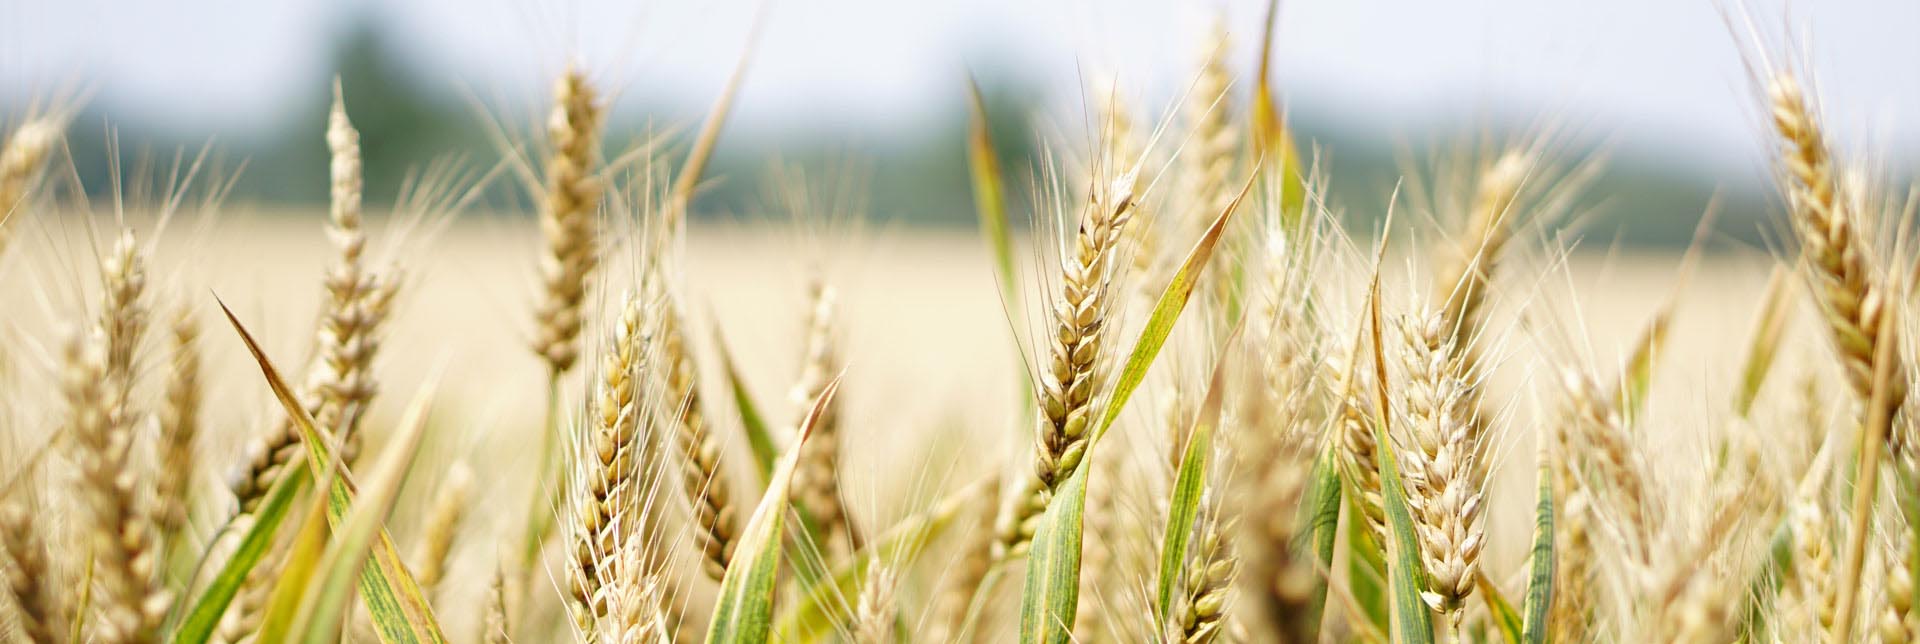 Wheat01.jpg